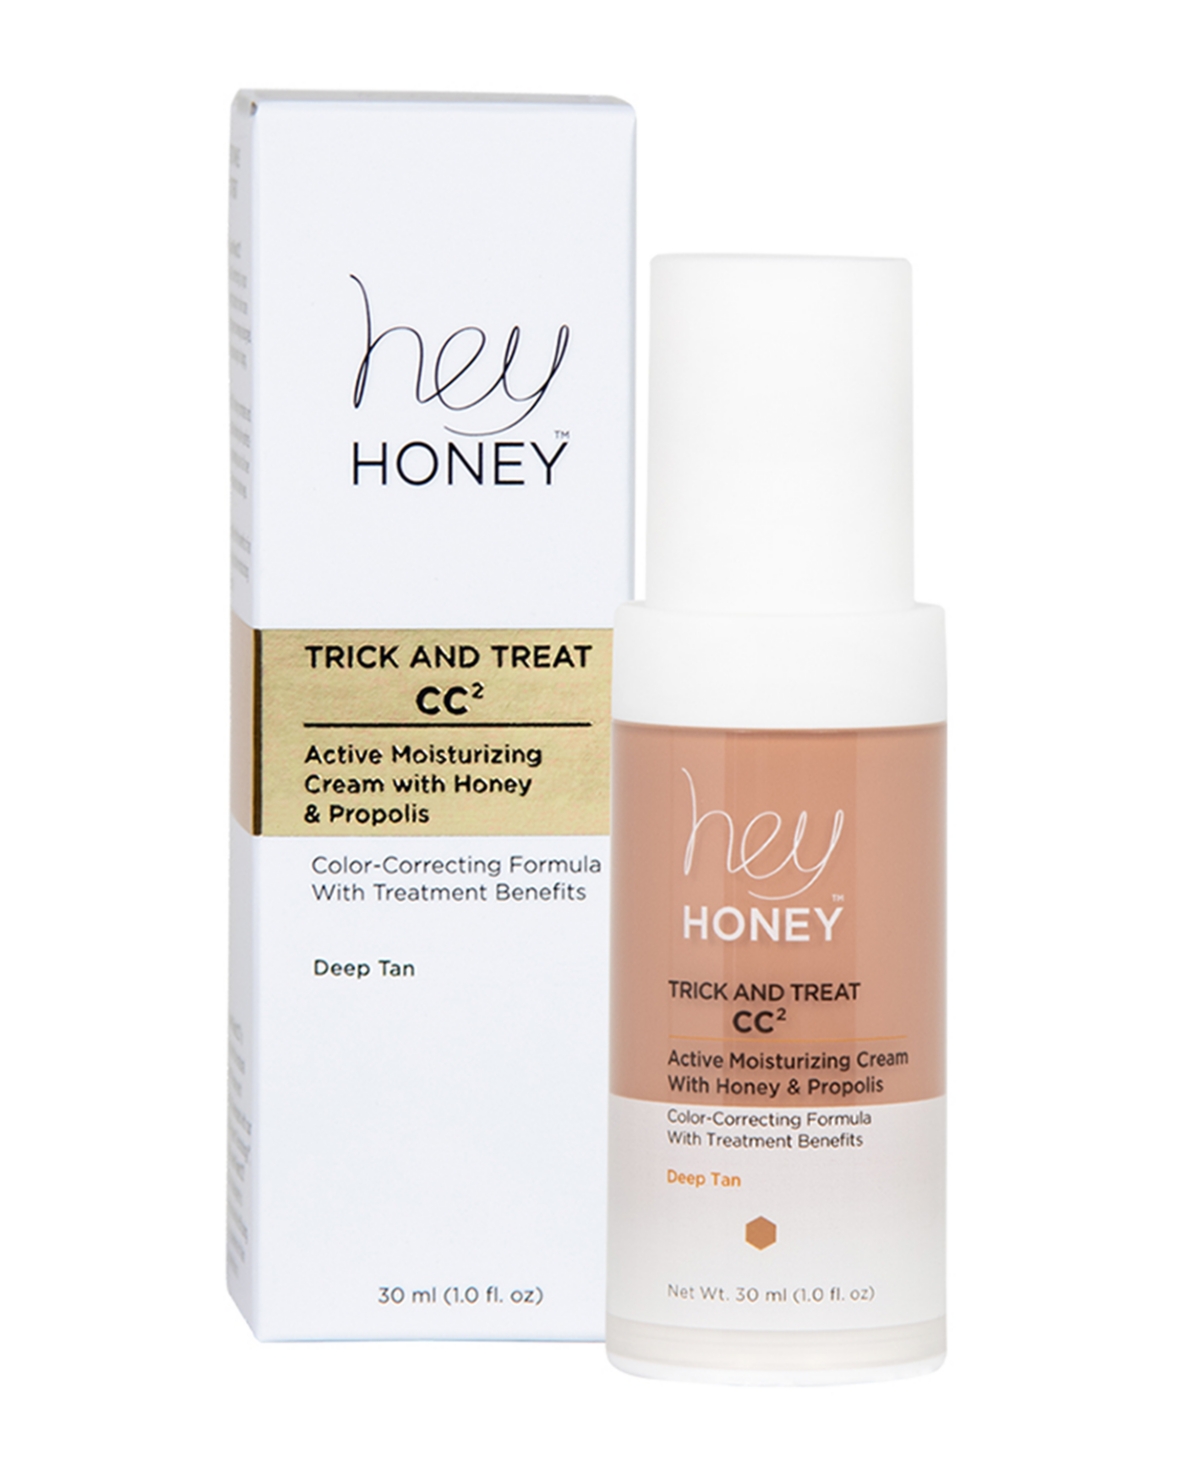 Hey Honey Trick and Treat CC2 Cream Active Moisturizing Color Correcting Cream with Honey and Propolis, 30 ml